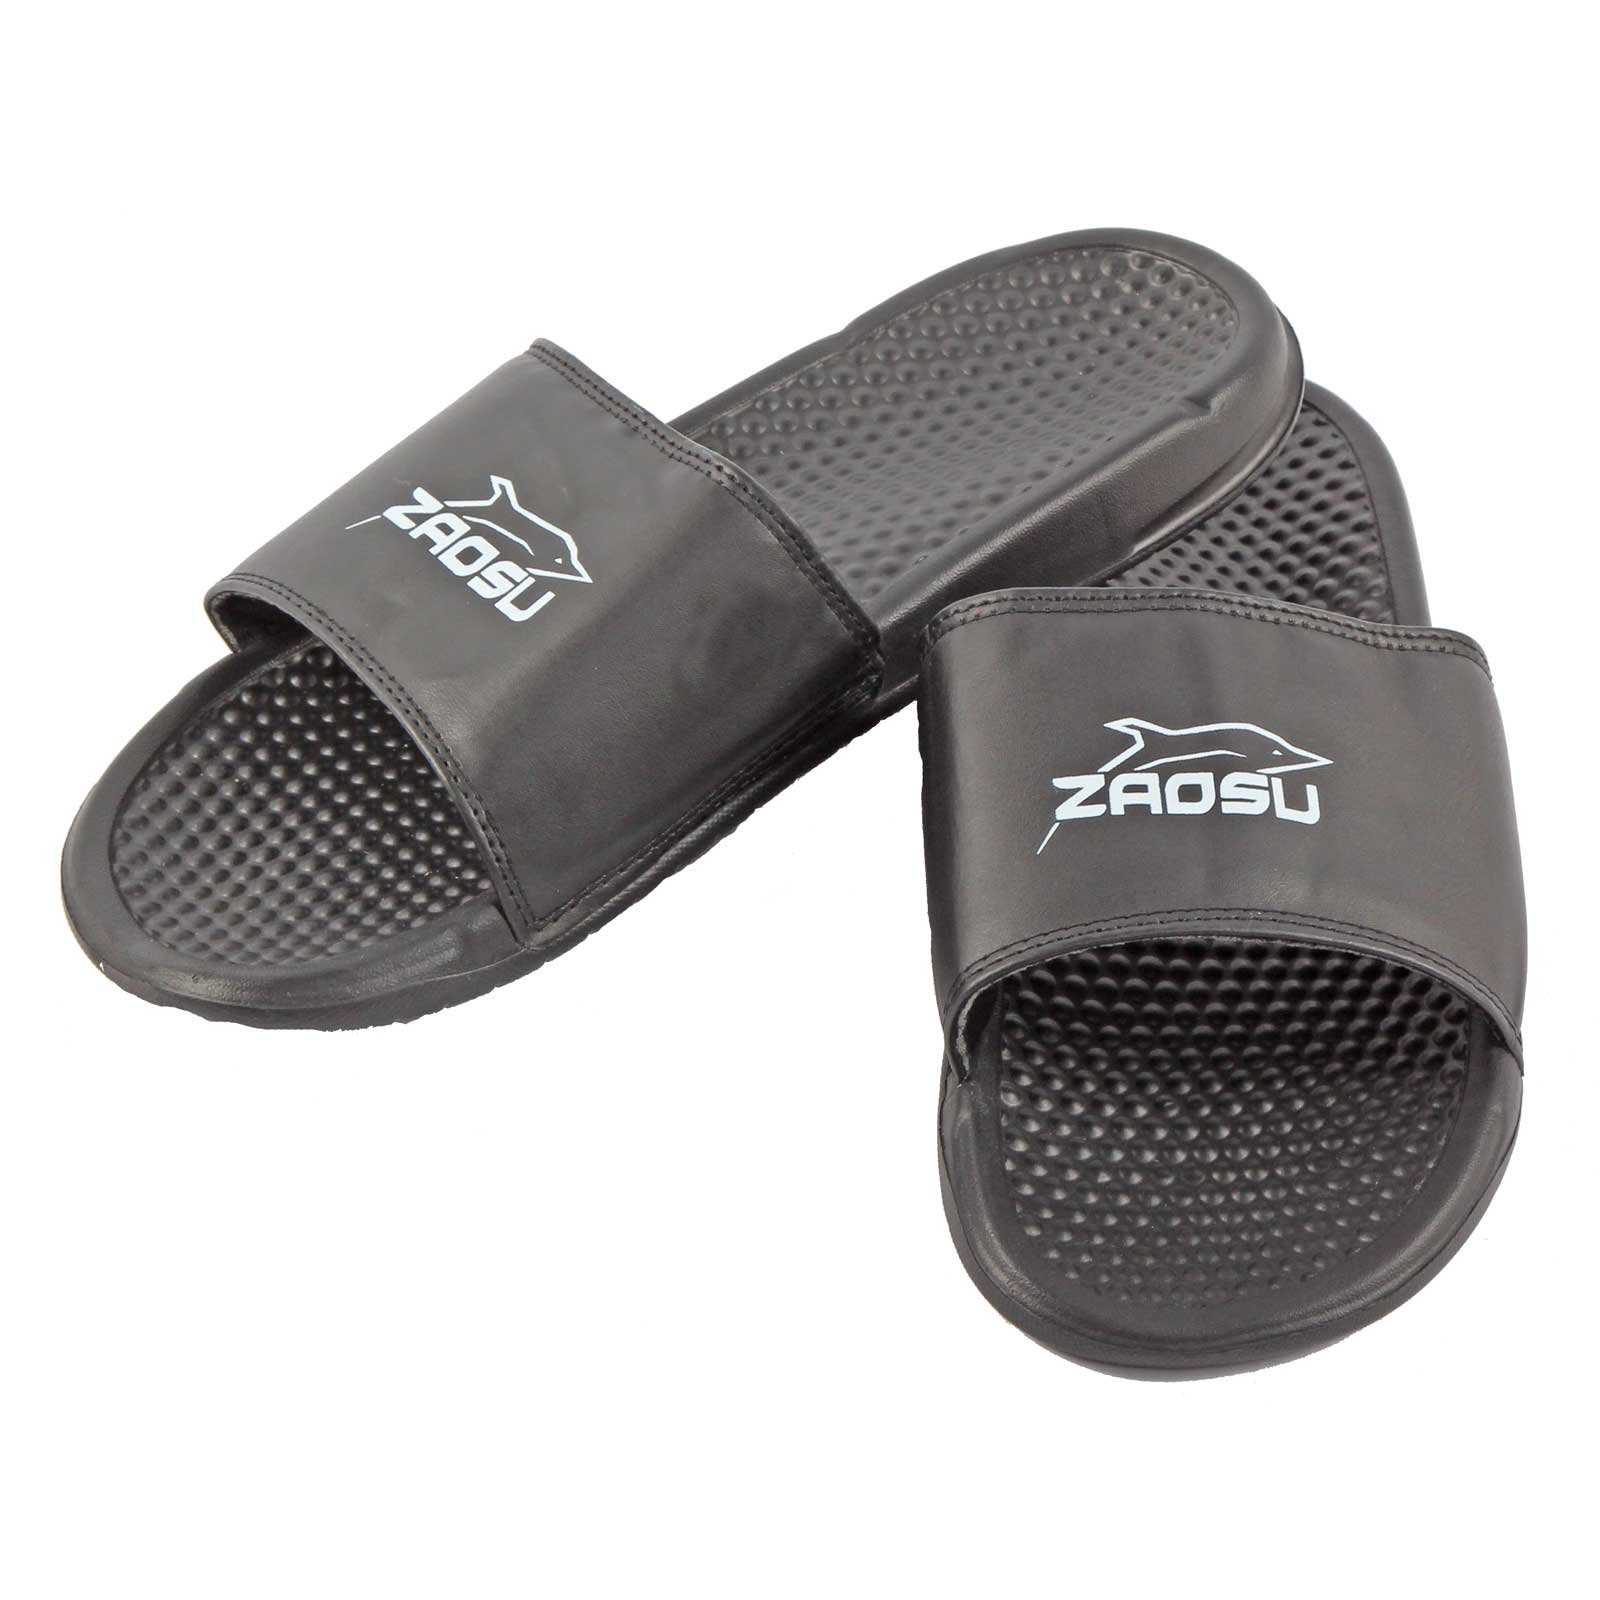 ZAOSU timeless slippers Badeschuh Badesandale